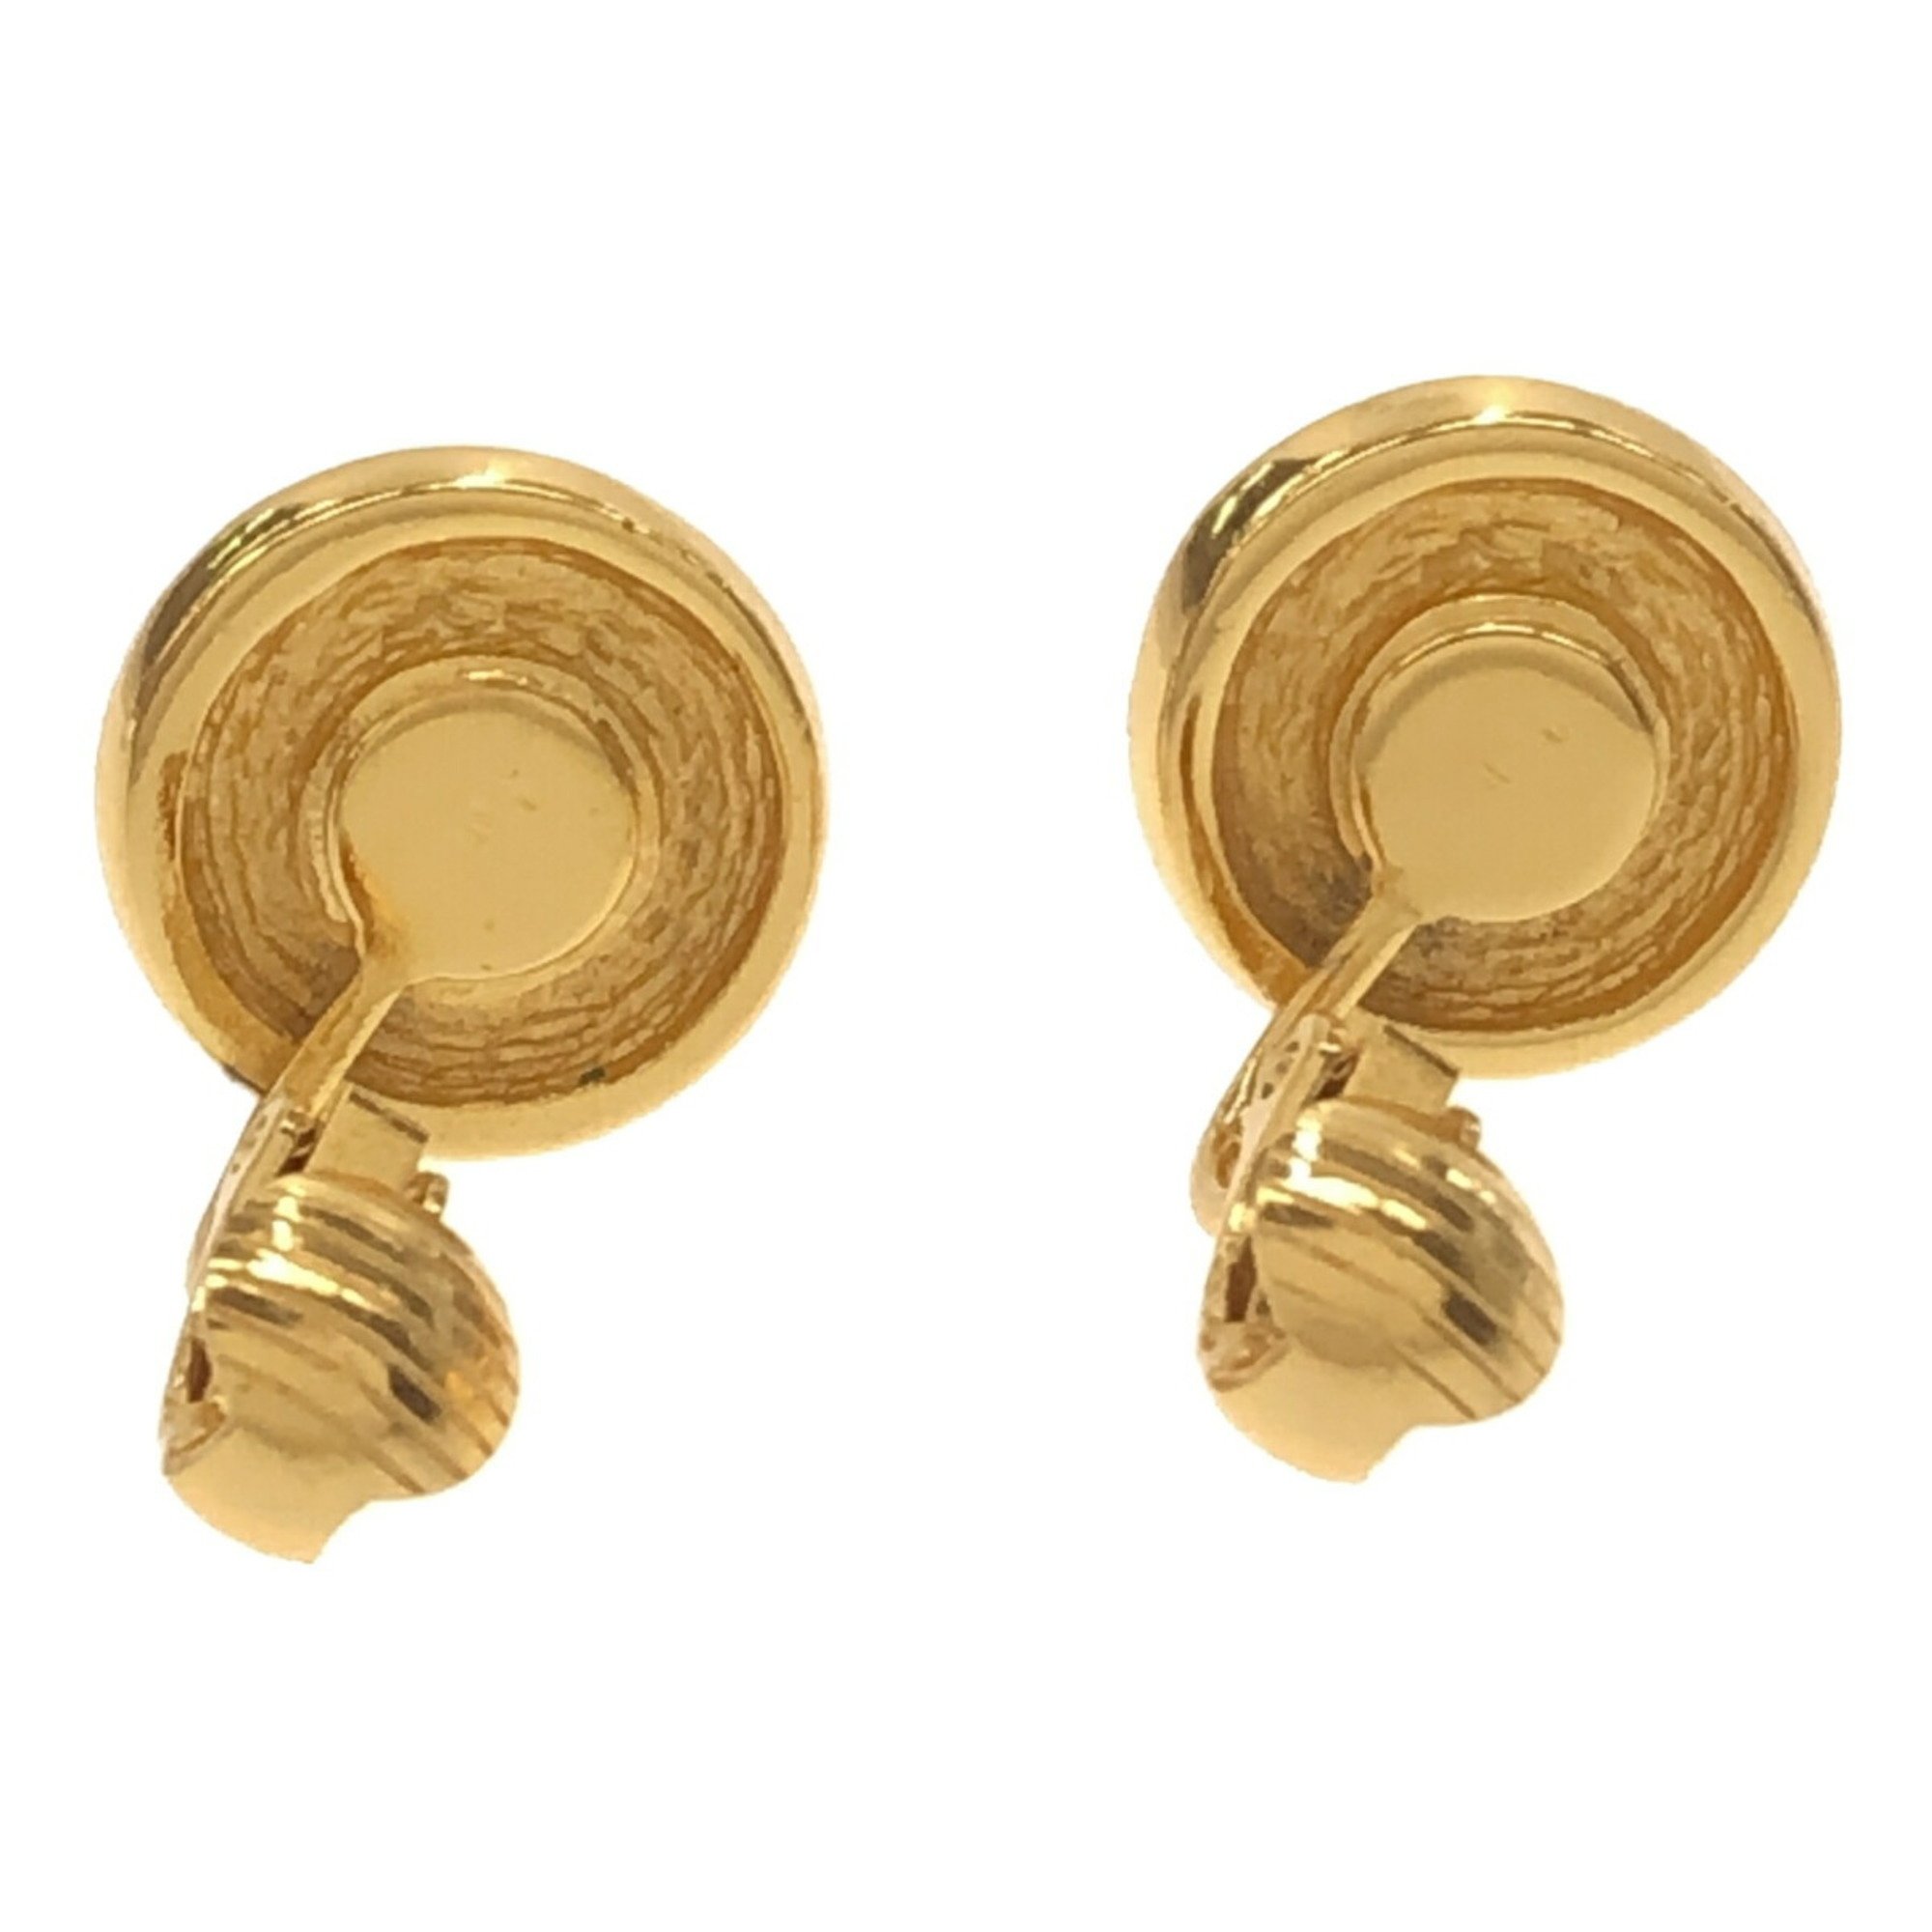 Christian Dior Earrings Gold Stone Black Women's ITR47GCVQ6Q0 RM1052R